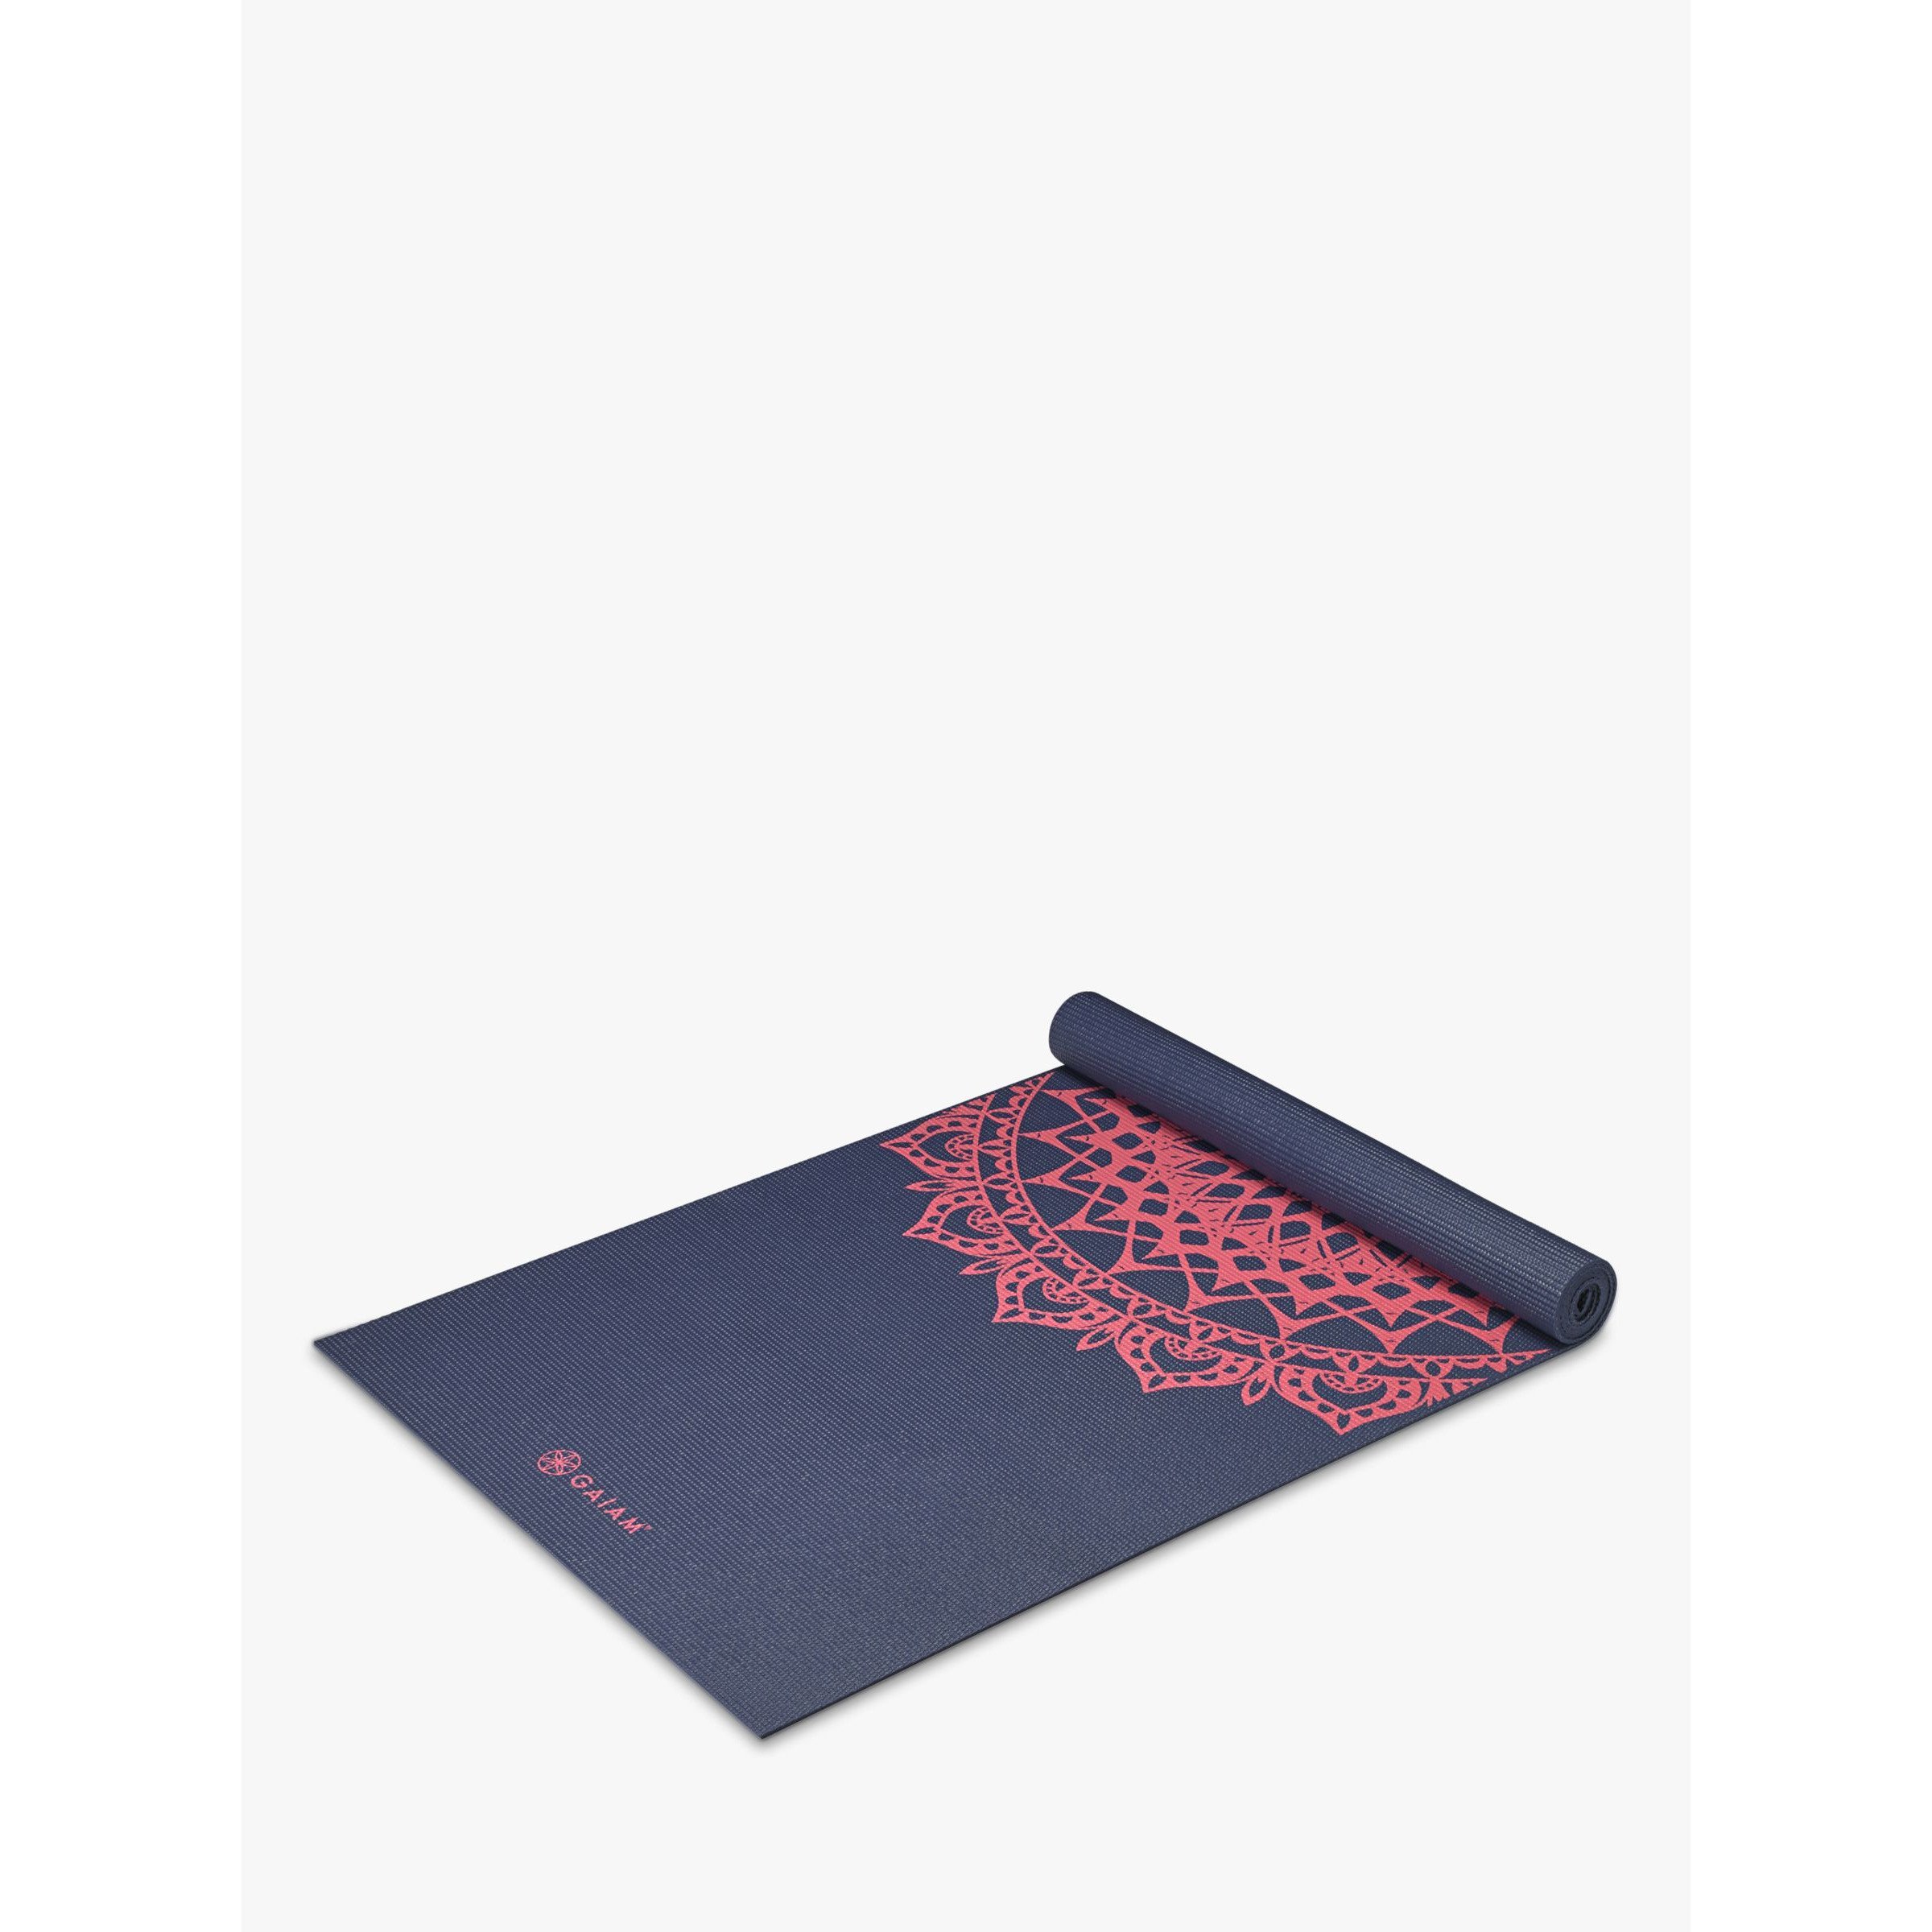 Gaiam Premium Marrakesh 4mm Yoga Mat, Navy Fleur by John Lewis & Partners